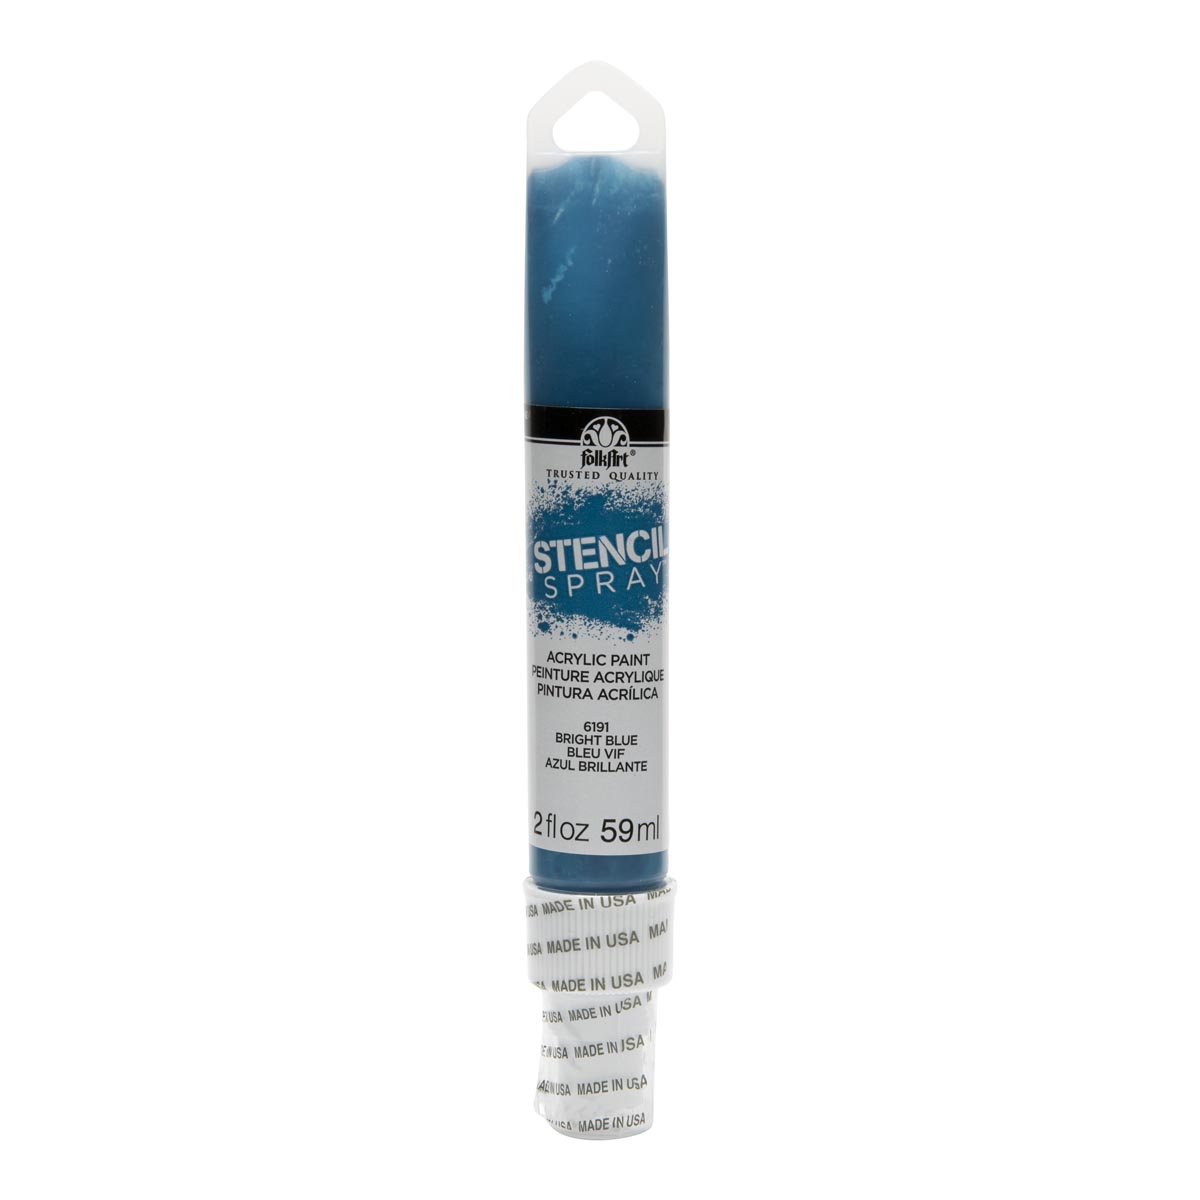 FolkArt ® Stencil Spray™ Acrylic Paint - Bright Blue, 2 oz. - 6191